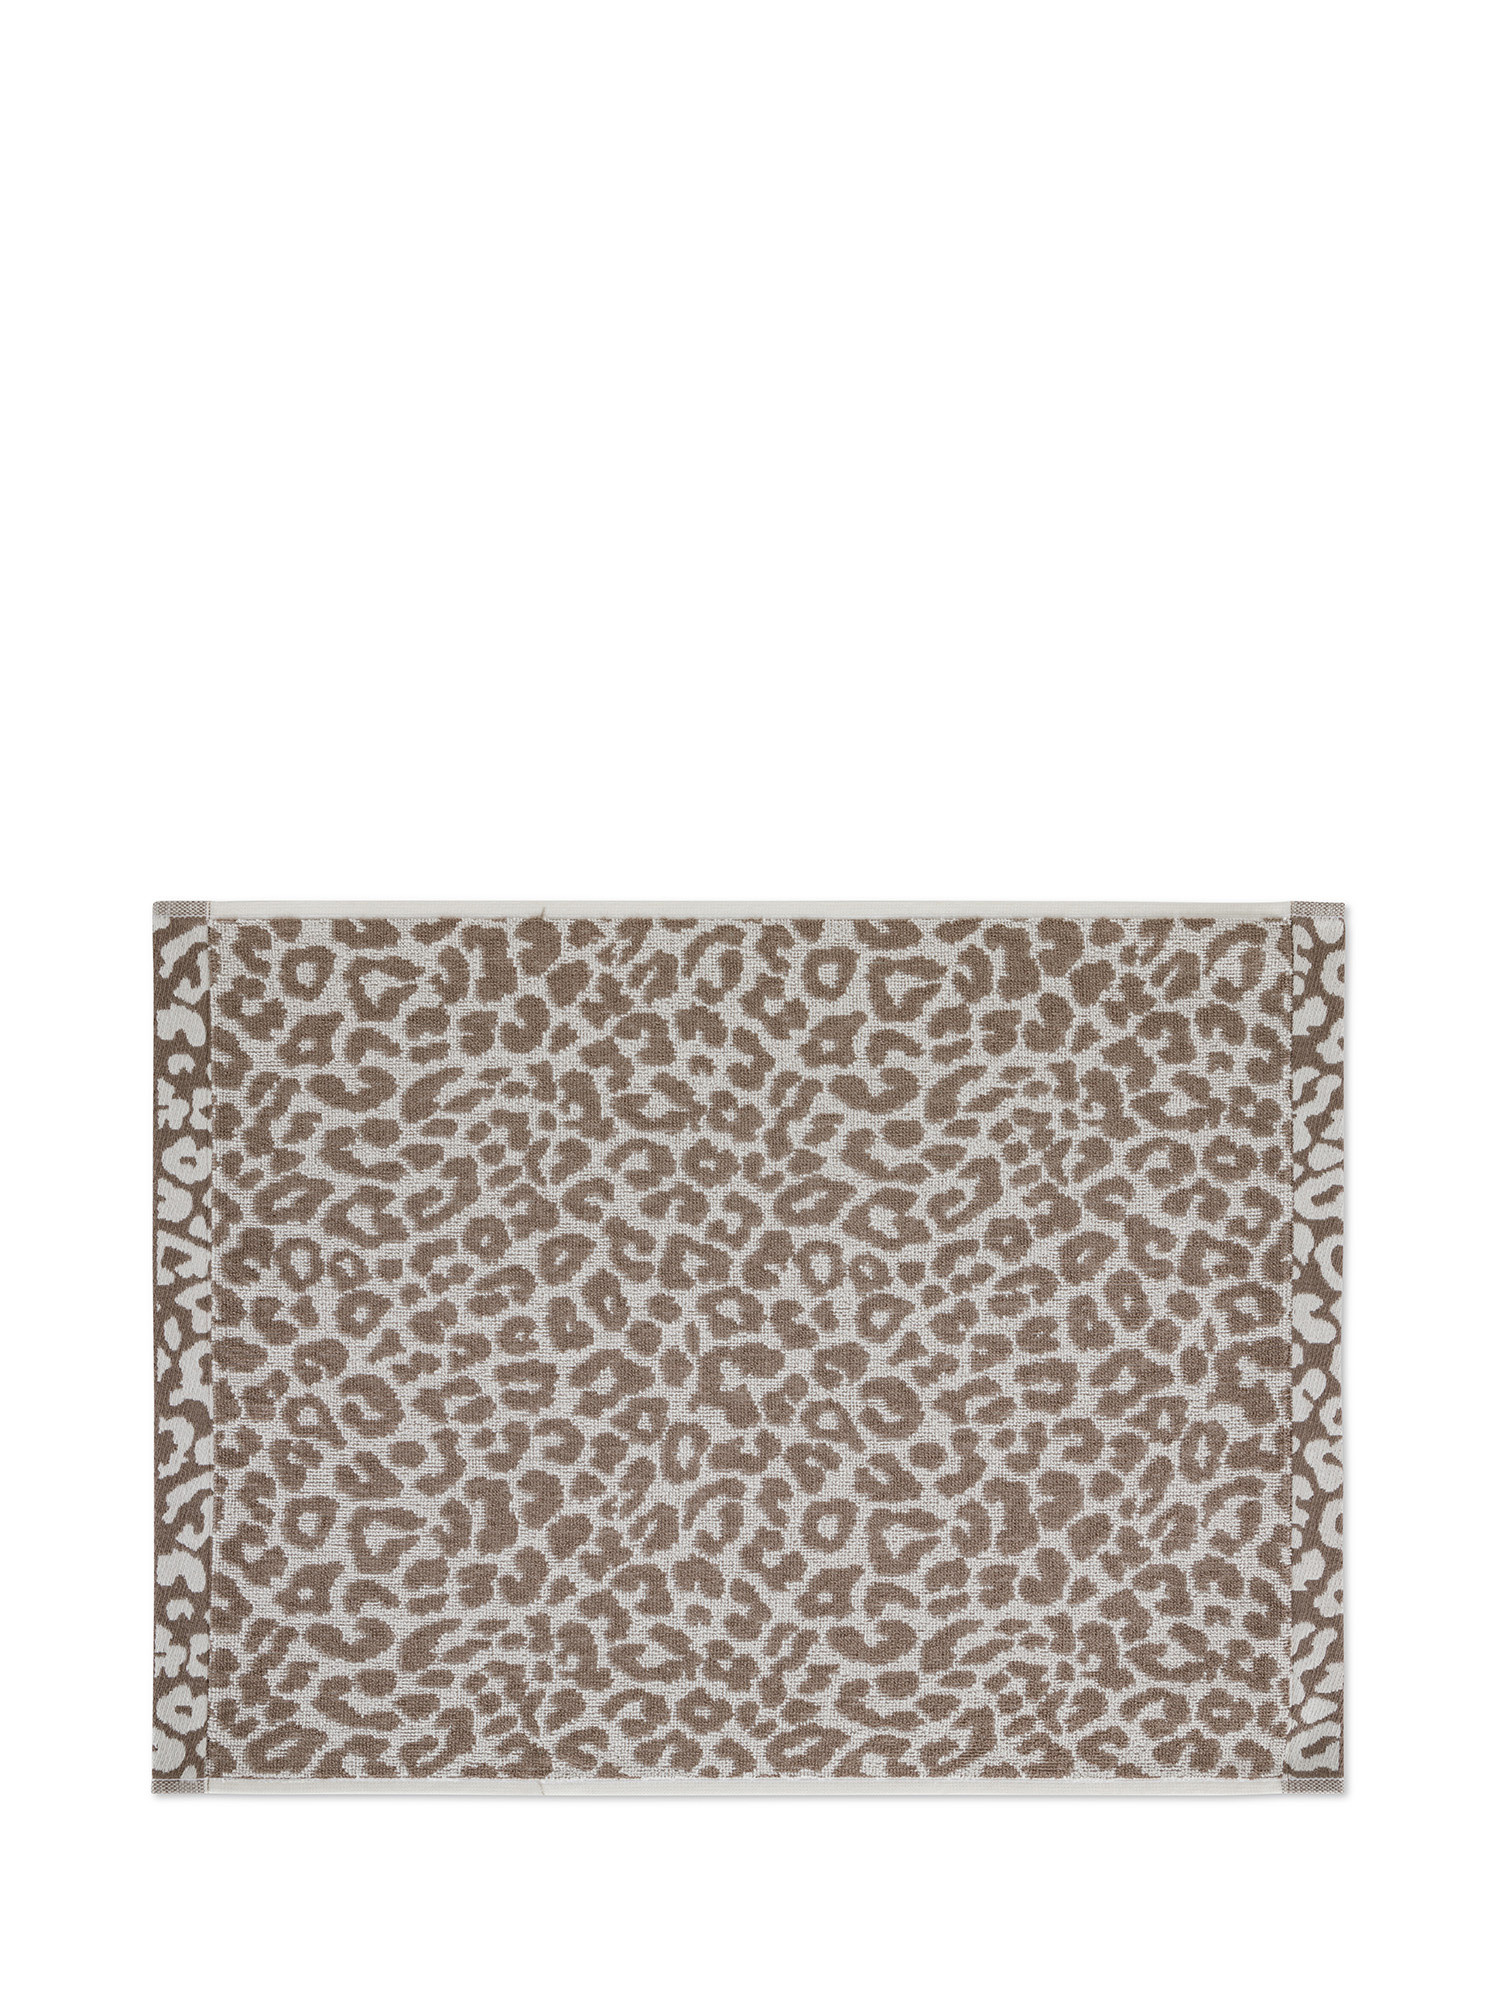 Asciugamano in spugna di cotone jacquard motivo animalier, Beige, large image number 1